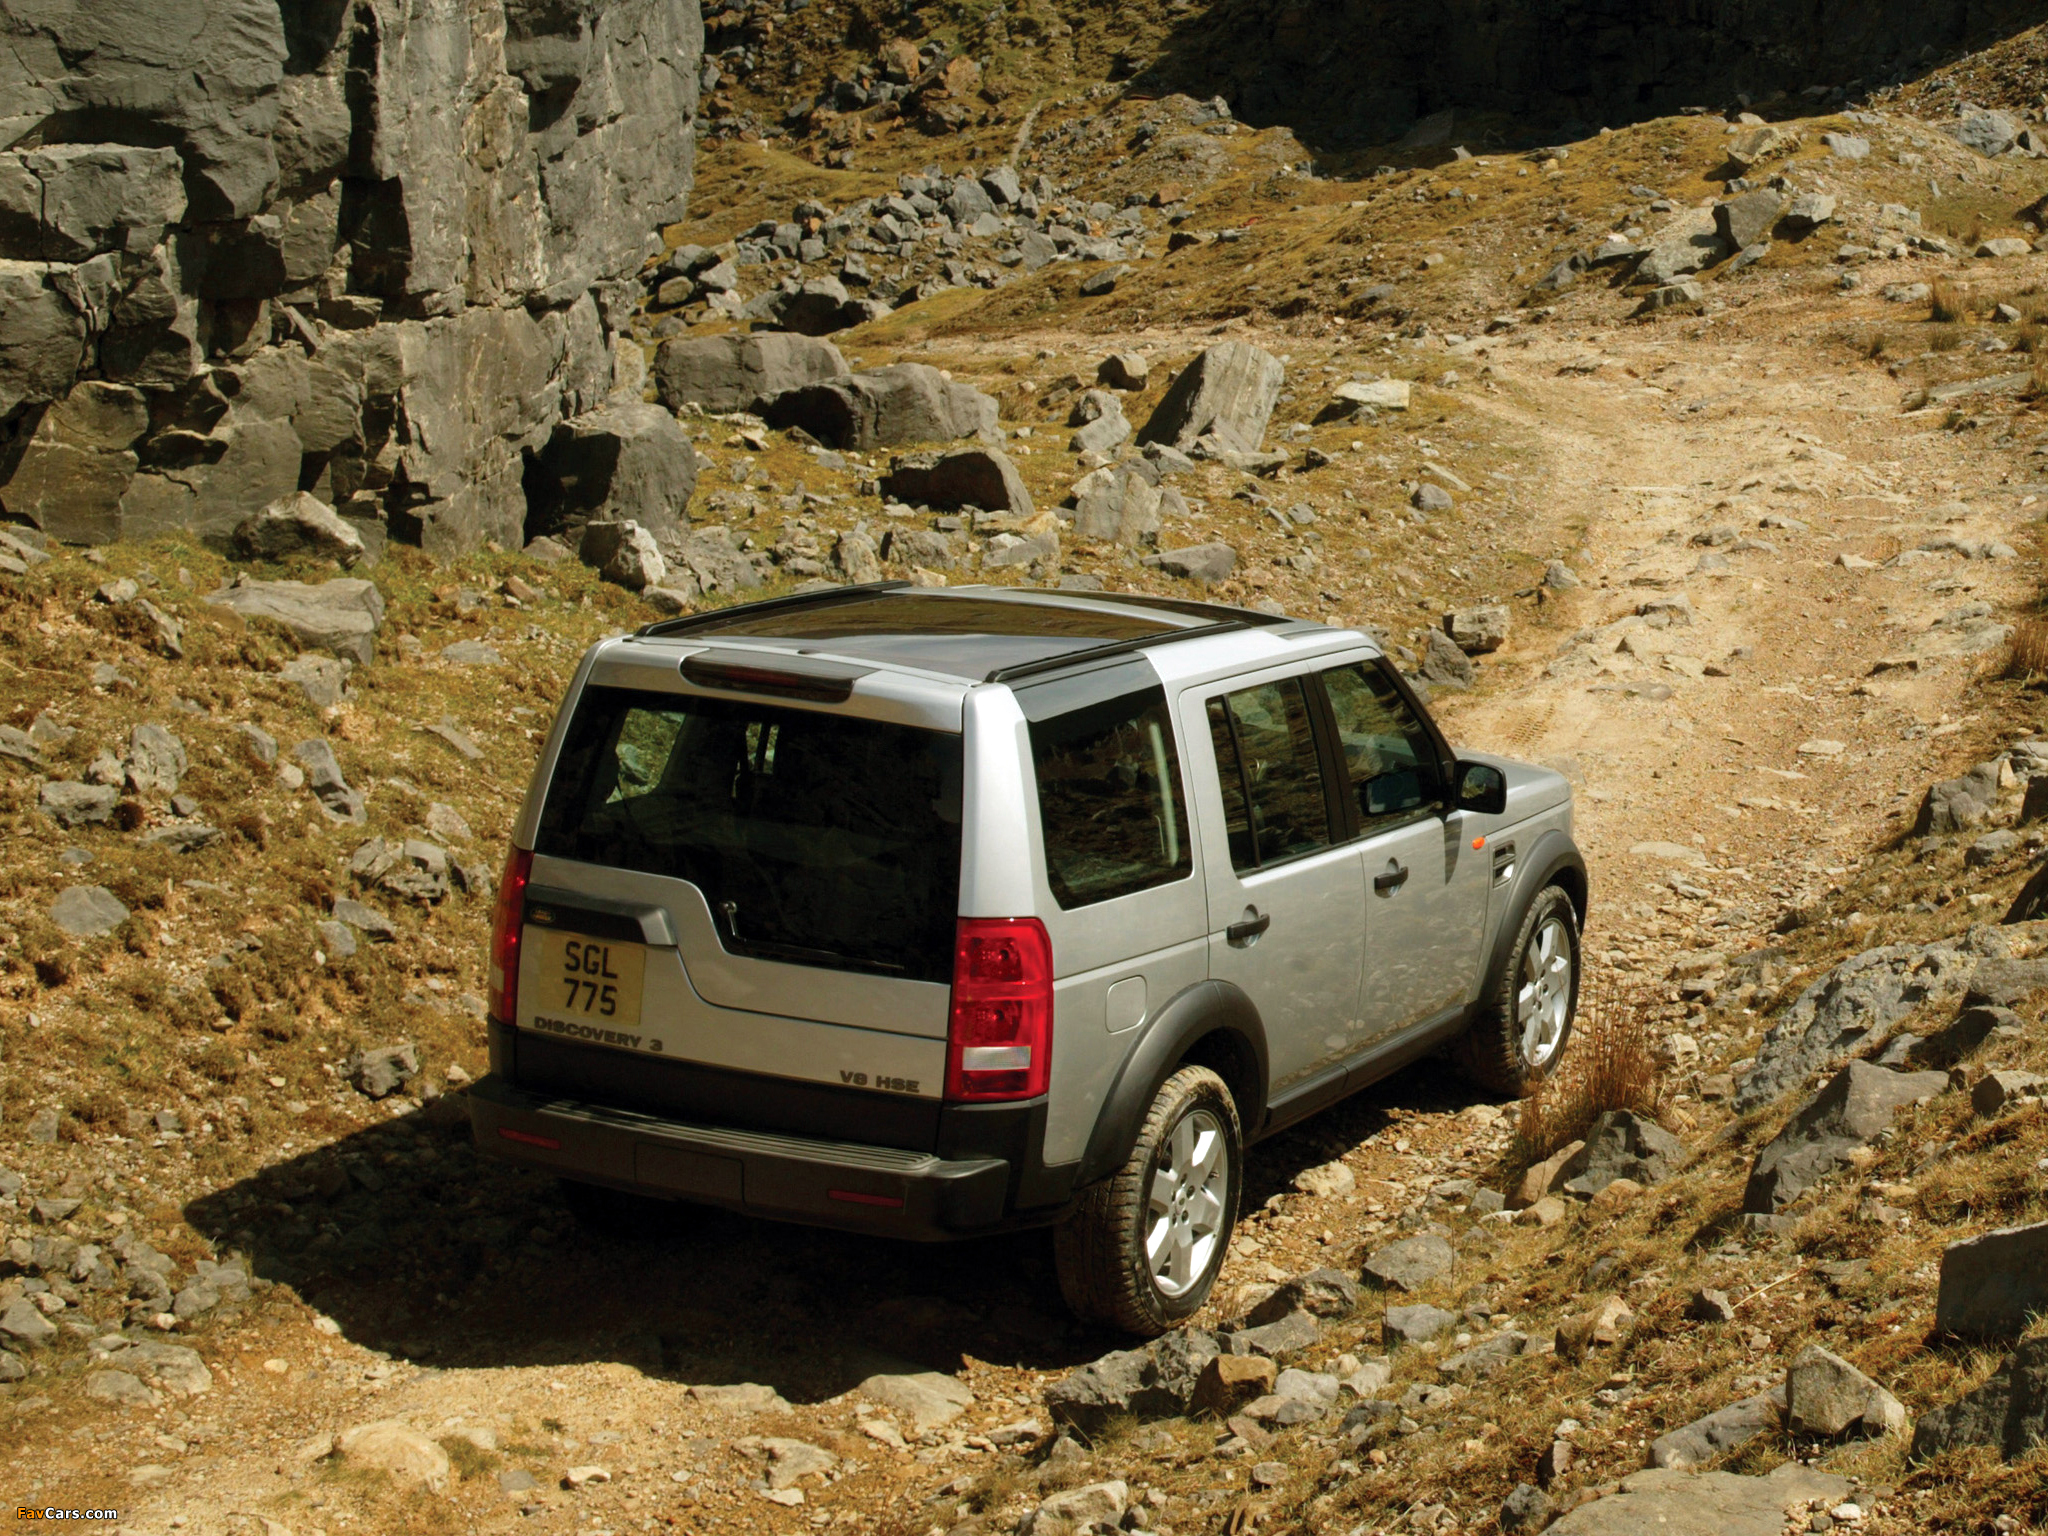 Вине дискавери. Land Rover Discovery 3 2004. Land Rover Discovery 3 2005. Land Rover lr3/Discovery 3. Ленд Ровер Дискавери 3 2008 года.